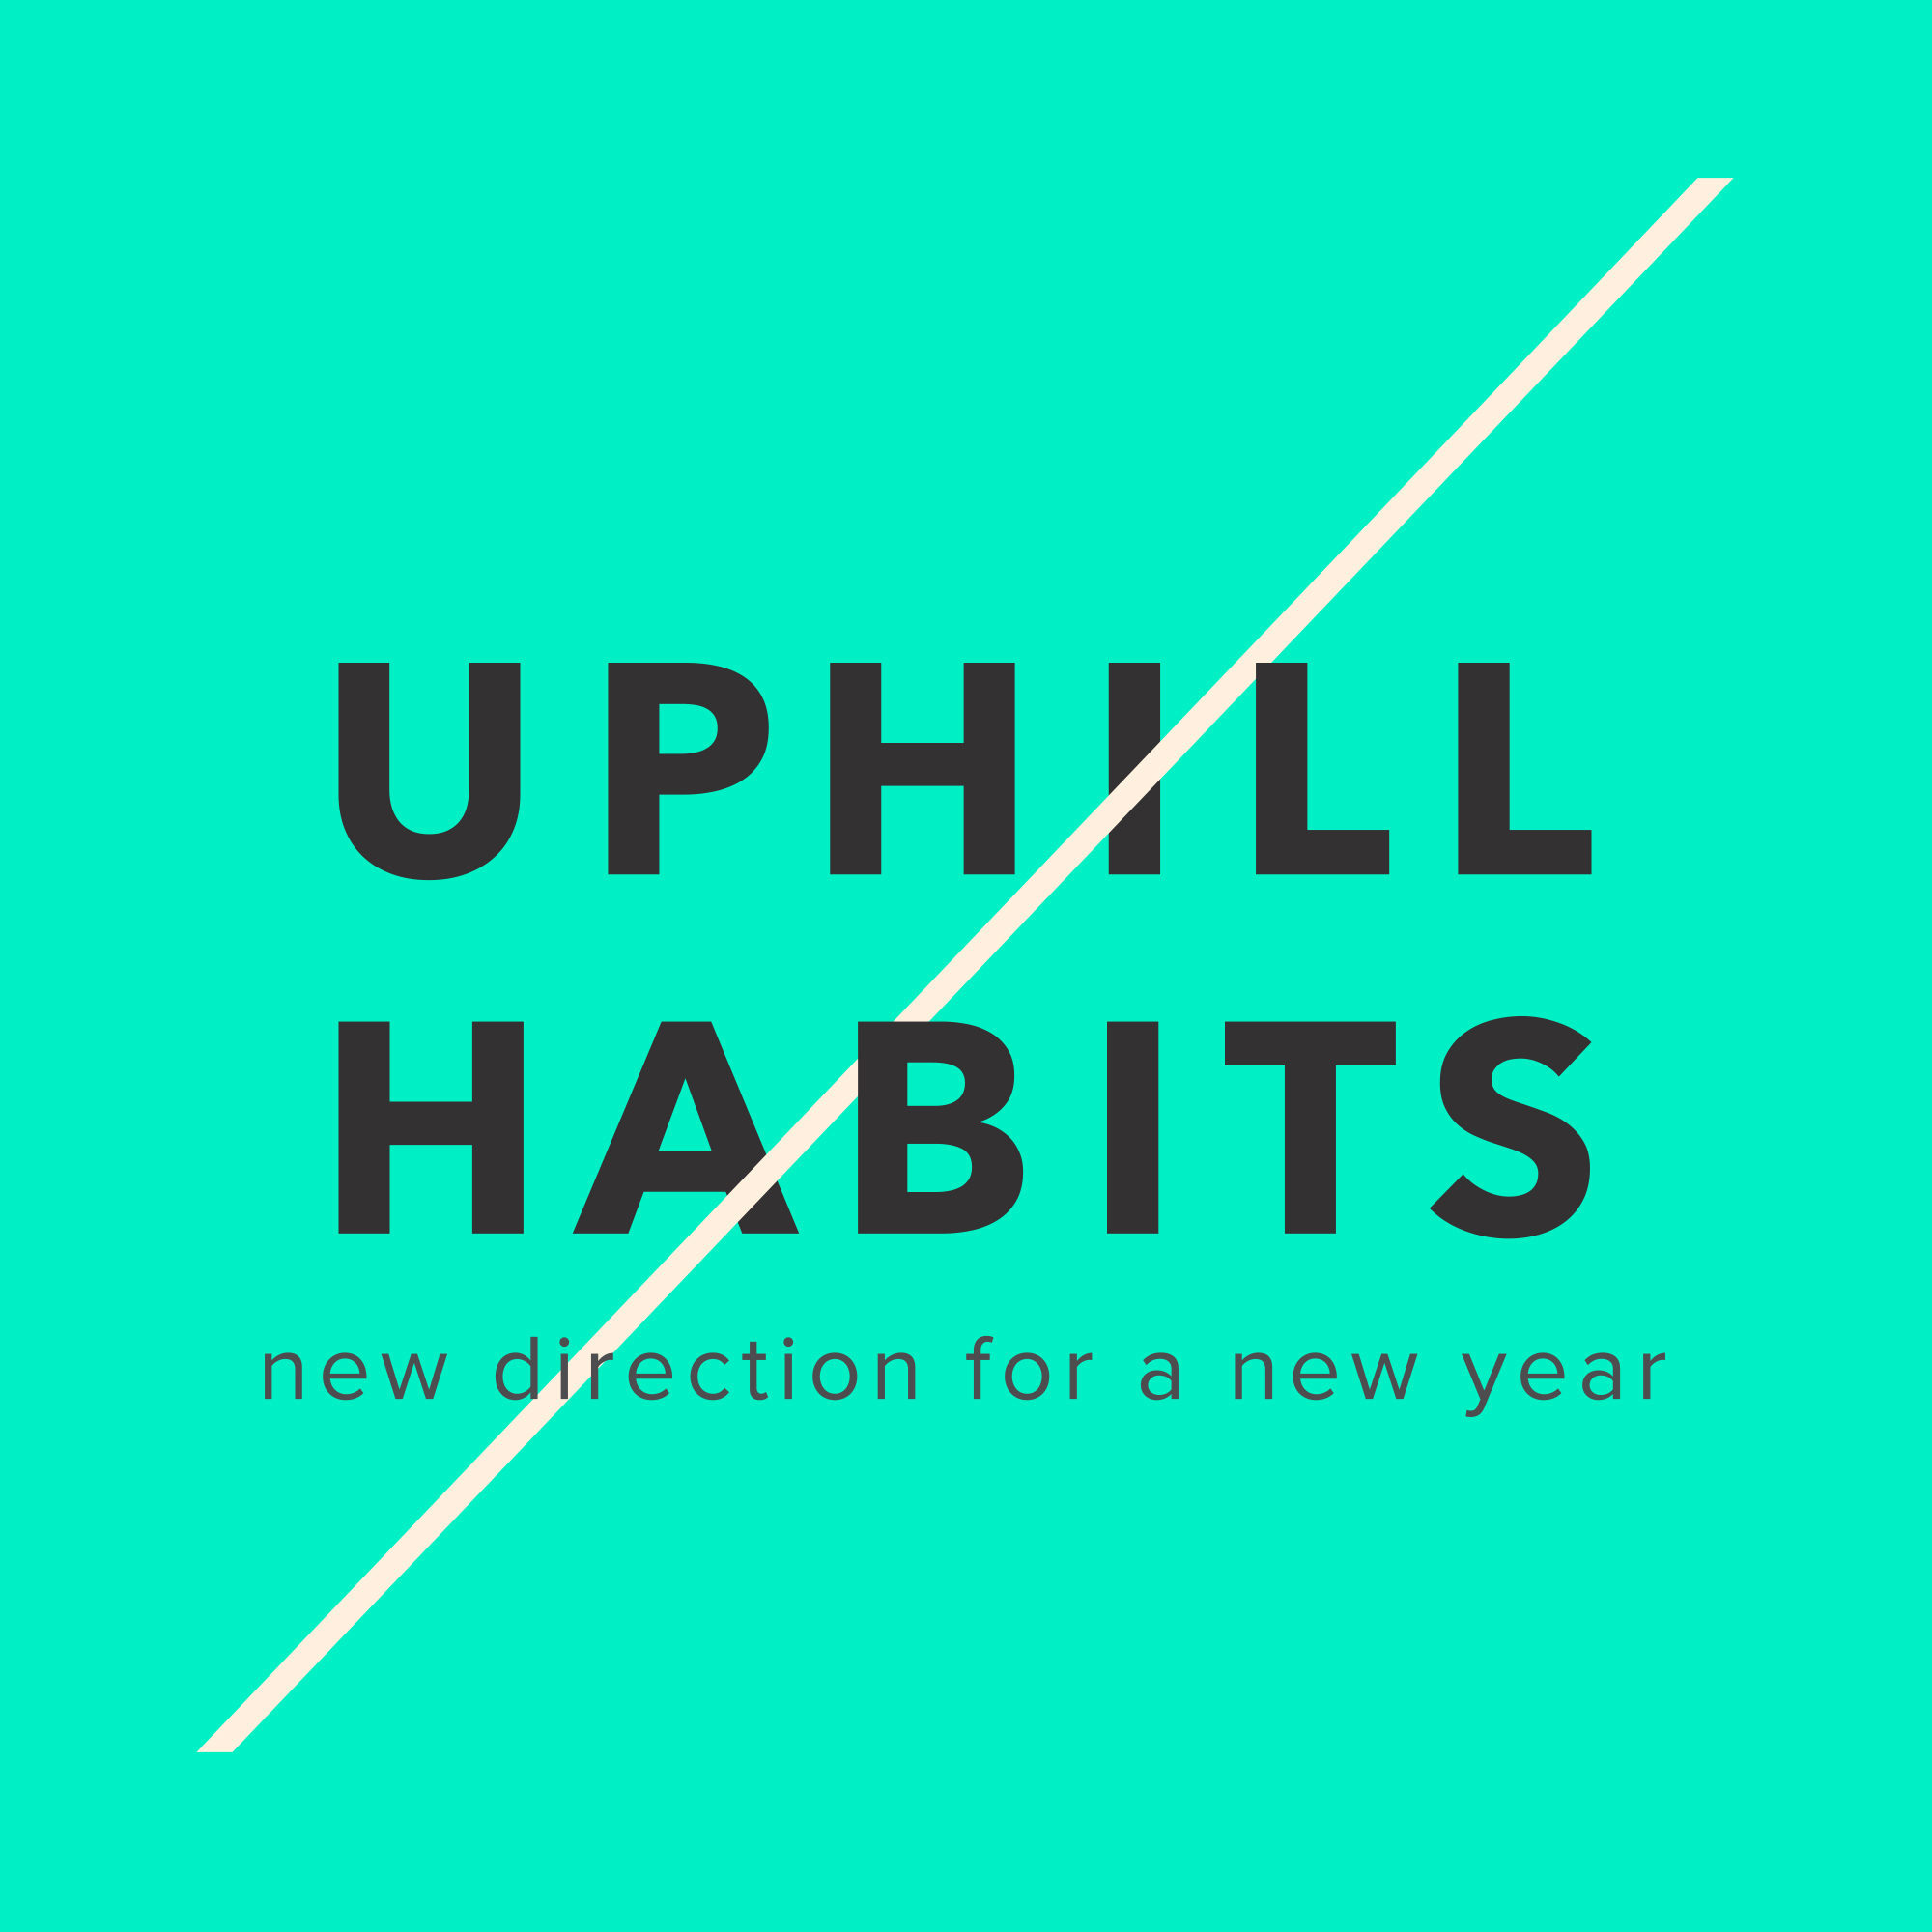 01-21-18 Uphill Habits Series Habit #3